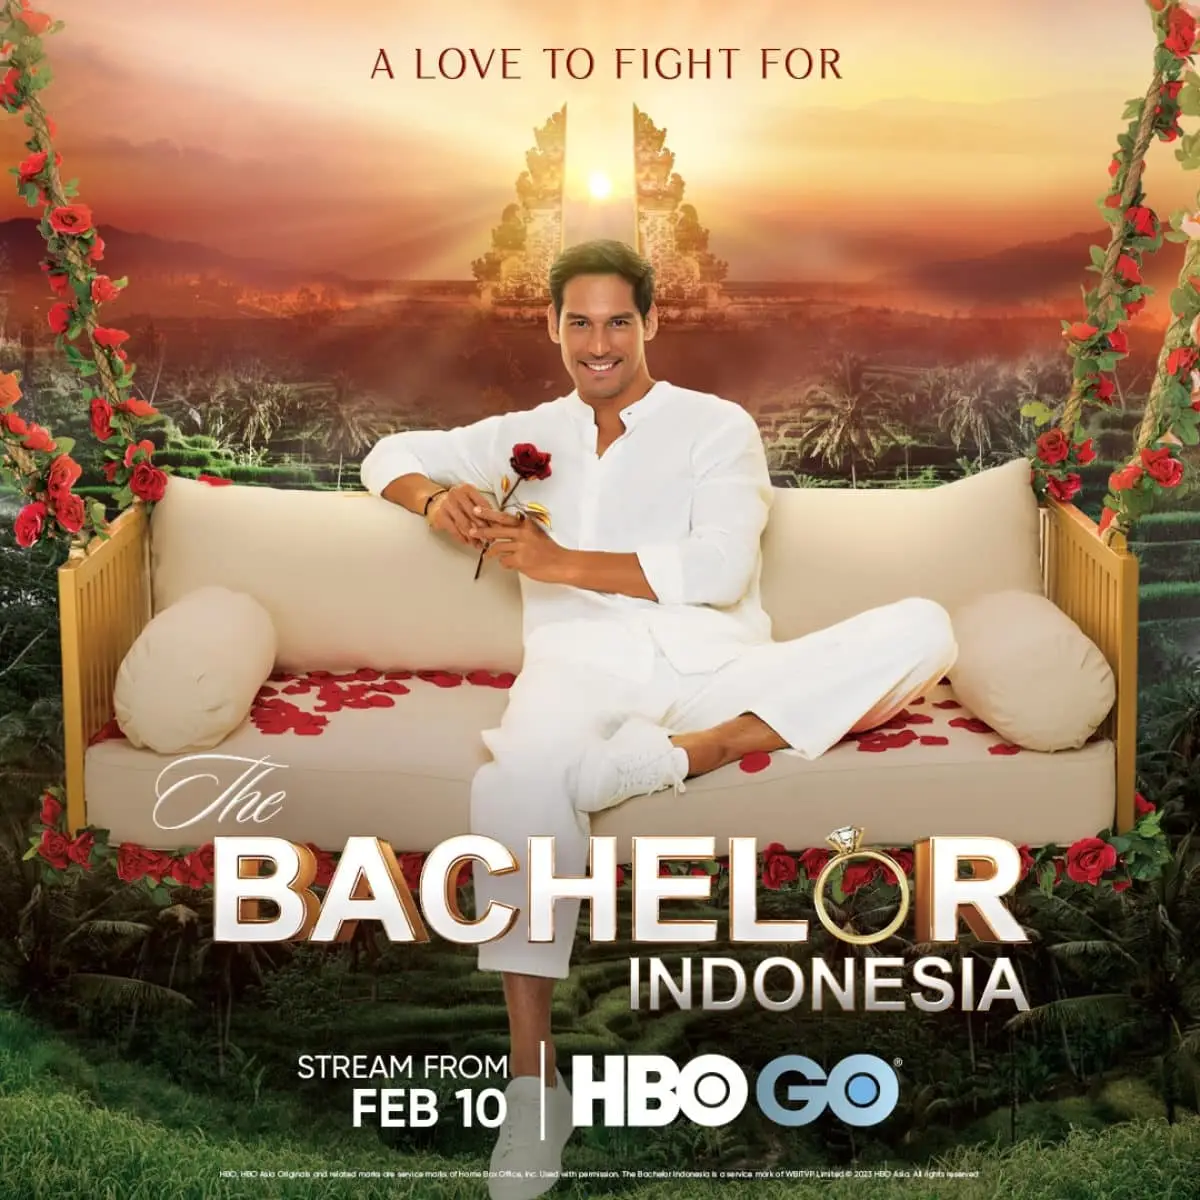 HBO GO ภาพยนตร์ ซีรีส์ FEB 2023 The Bachelor Indonesia